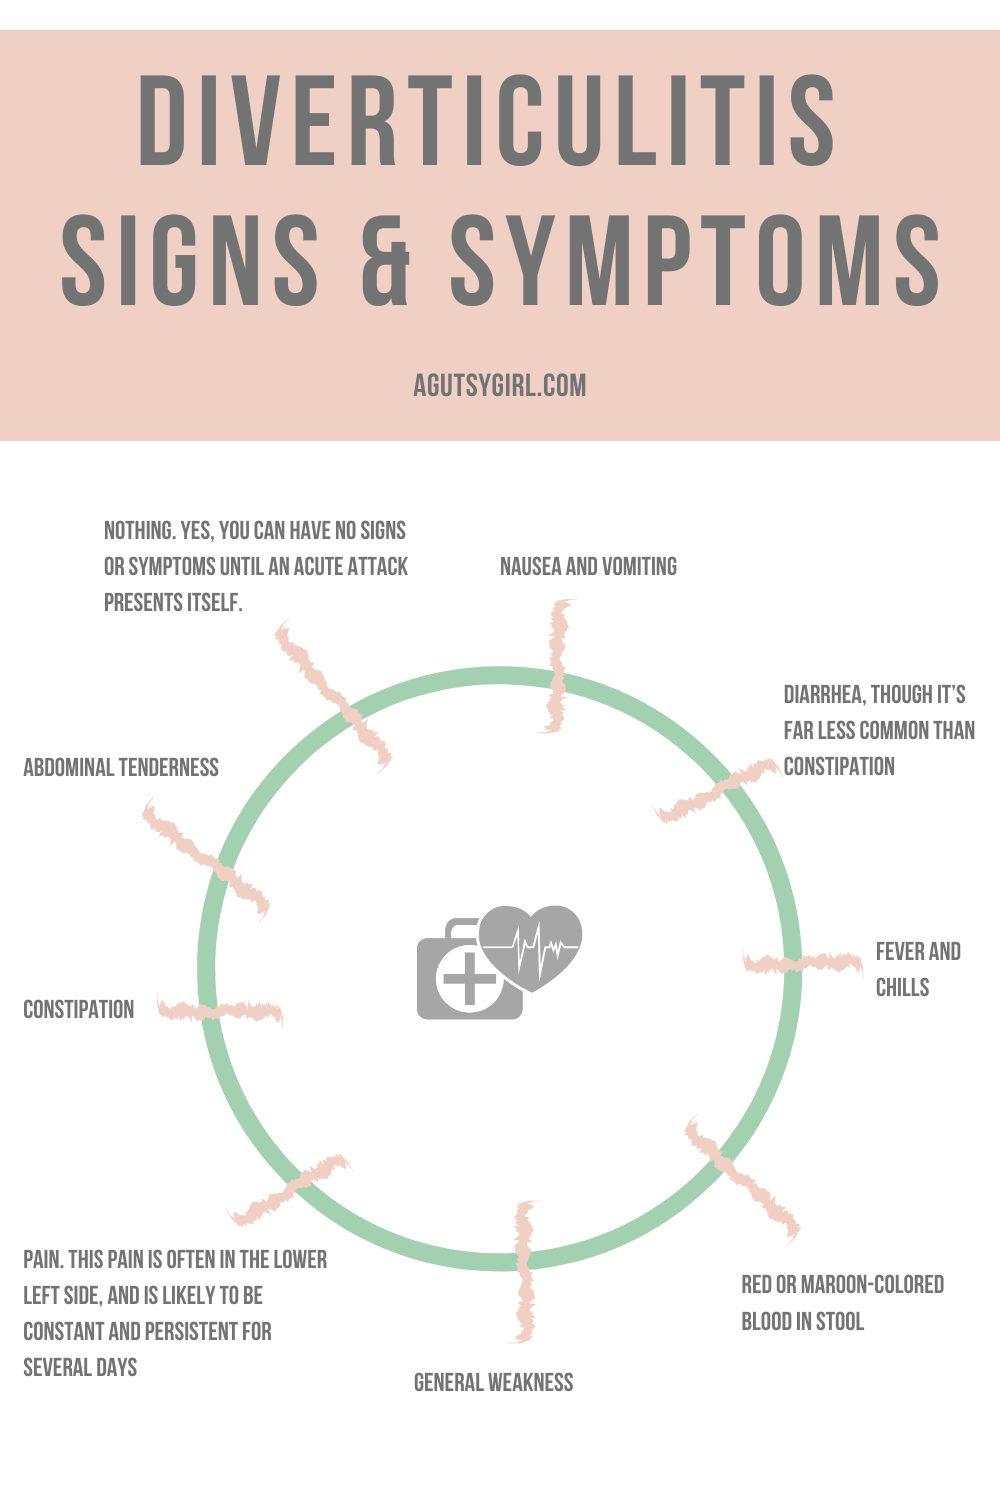 Diverticulitis Signs and Symptoms agutsygirl.com #diverticulitis #guthealth